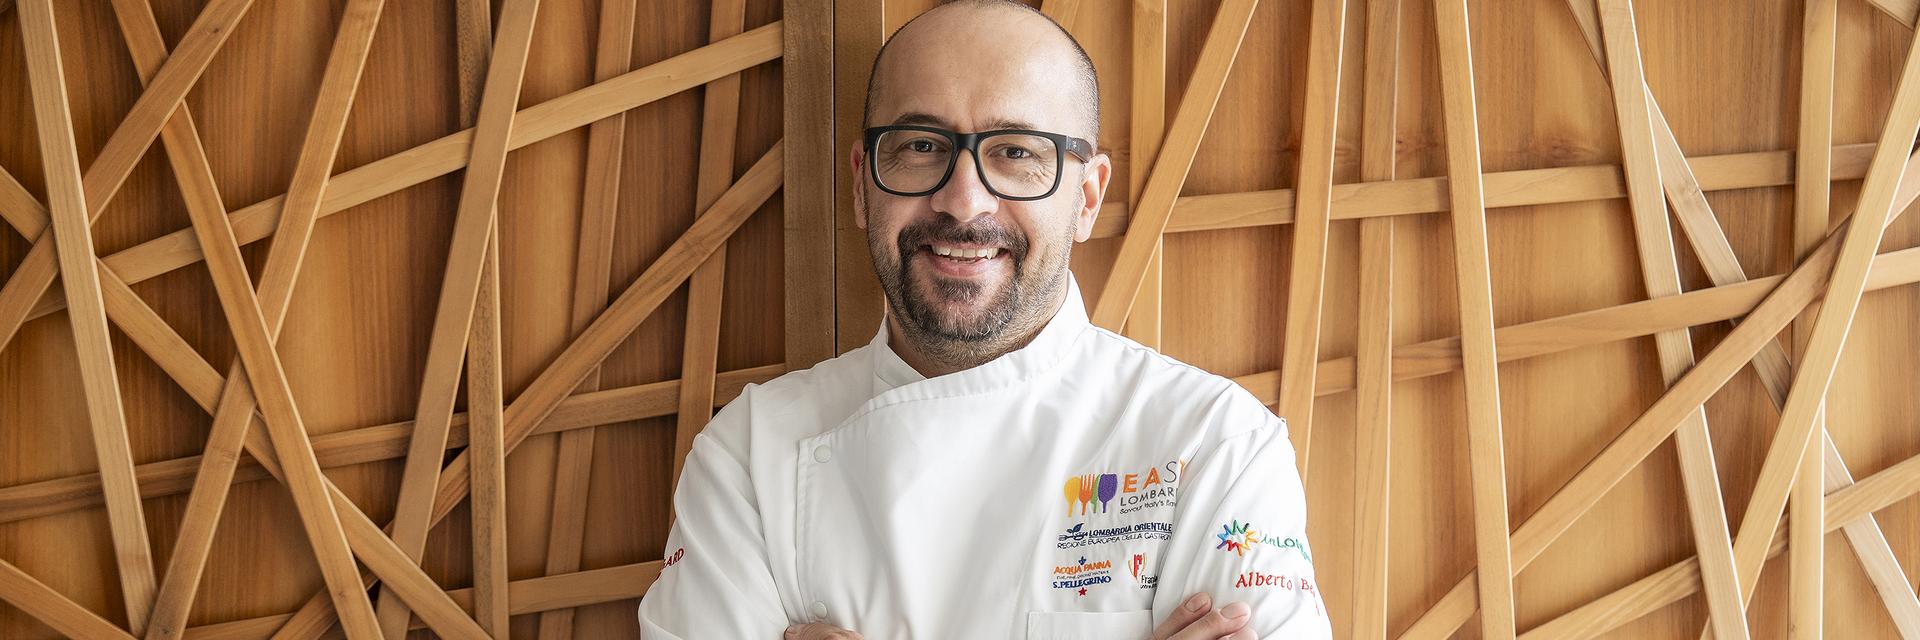 chef Alberto Bertani